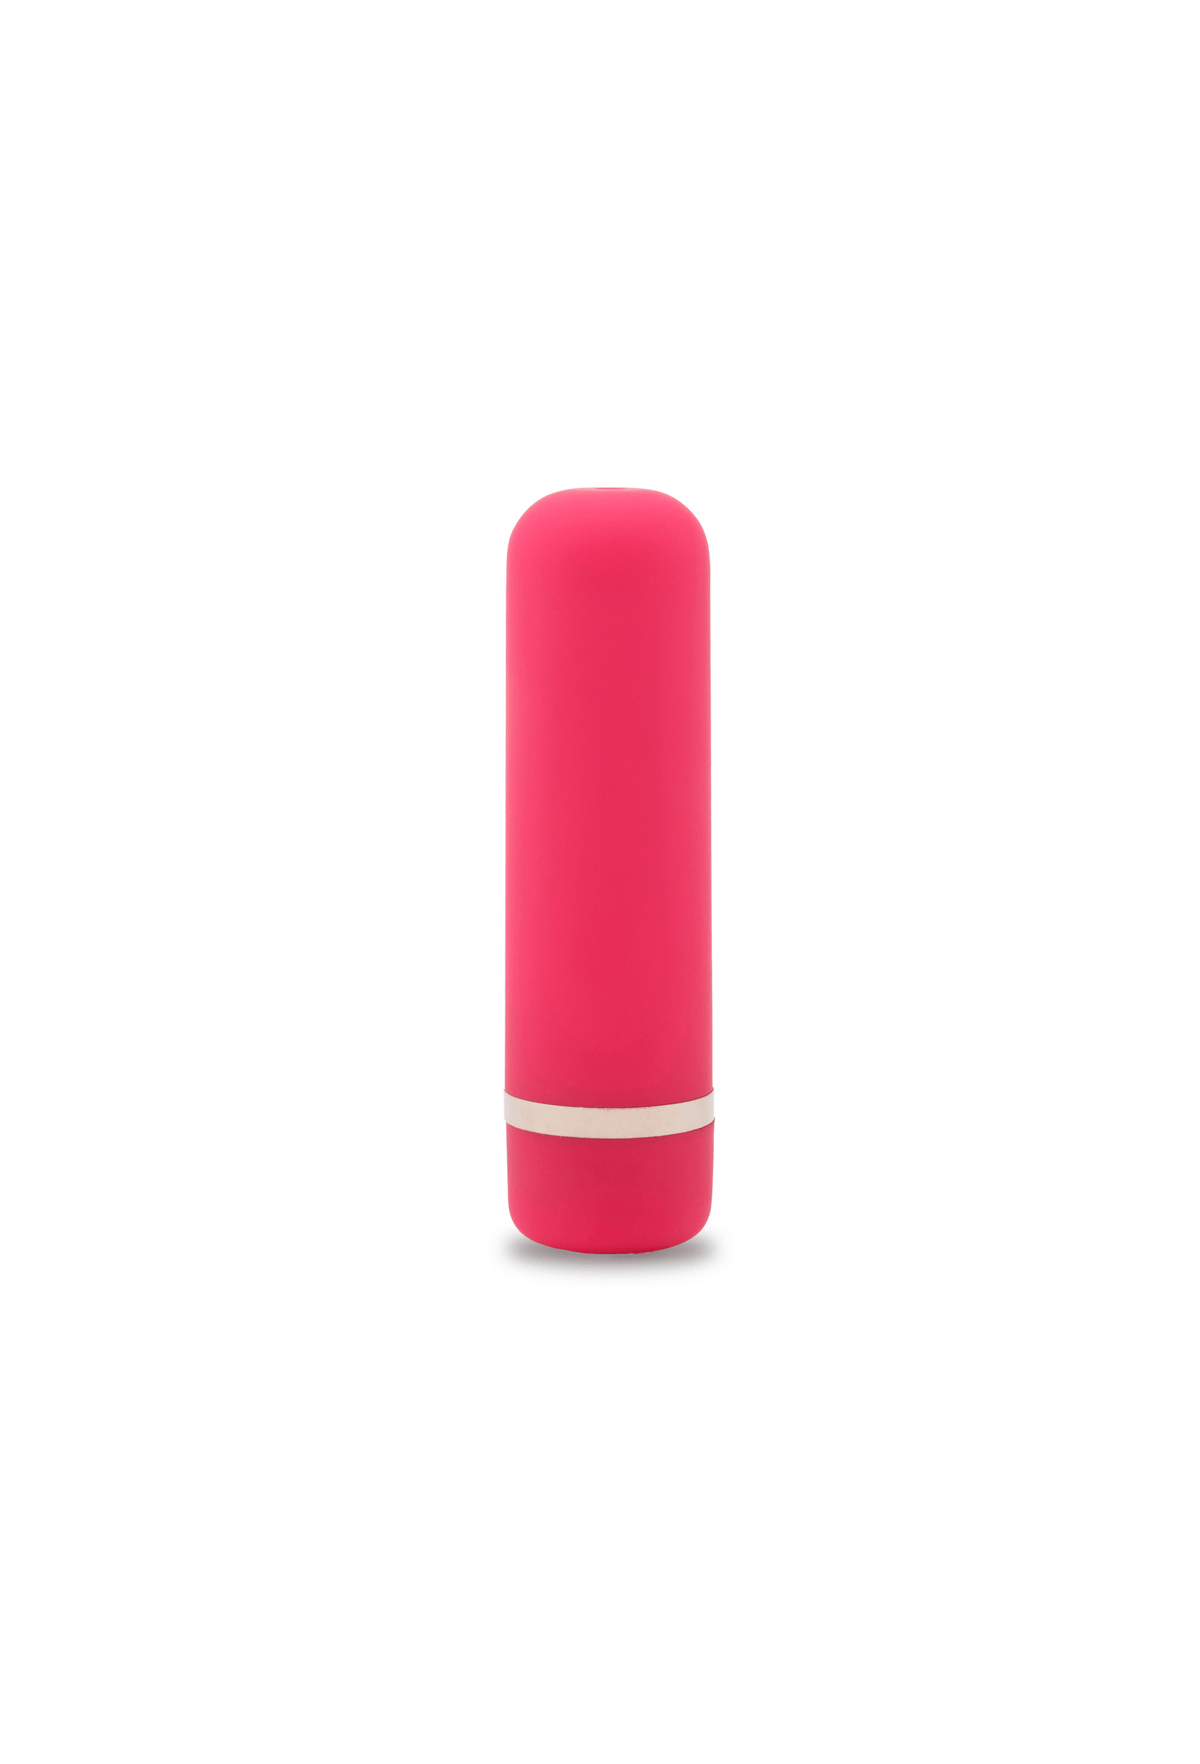 JOIE - Bullet Vibrator - Nu Sensuelle - PINK Vibrators Nu Sensuelle   